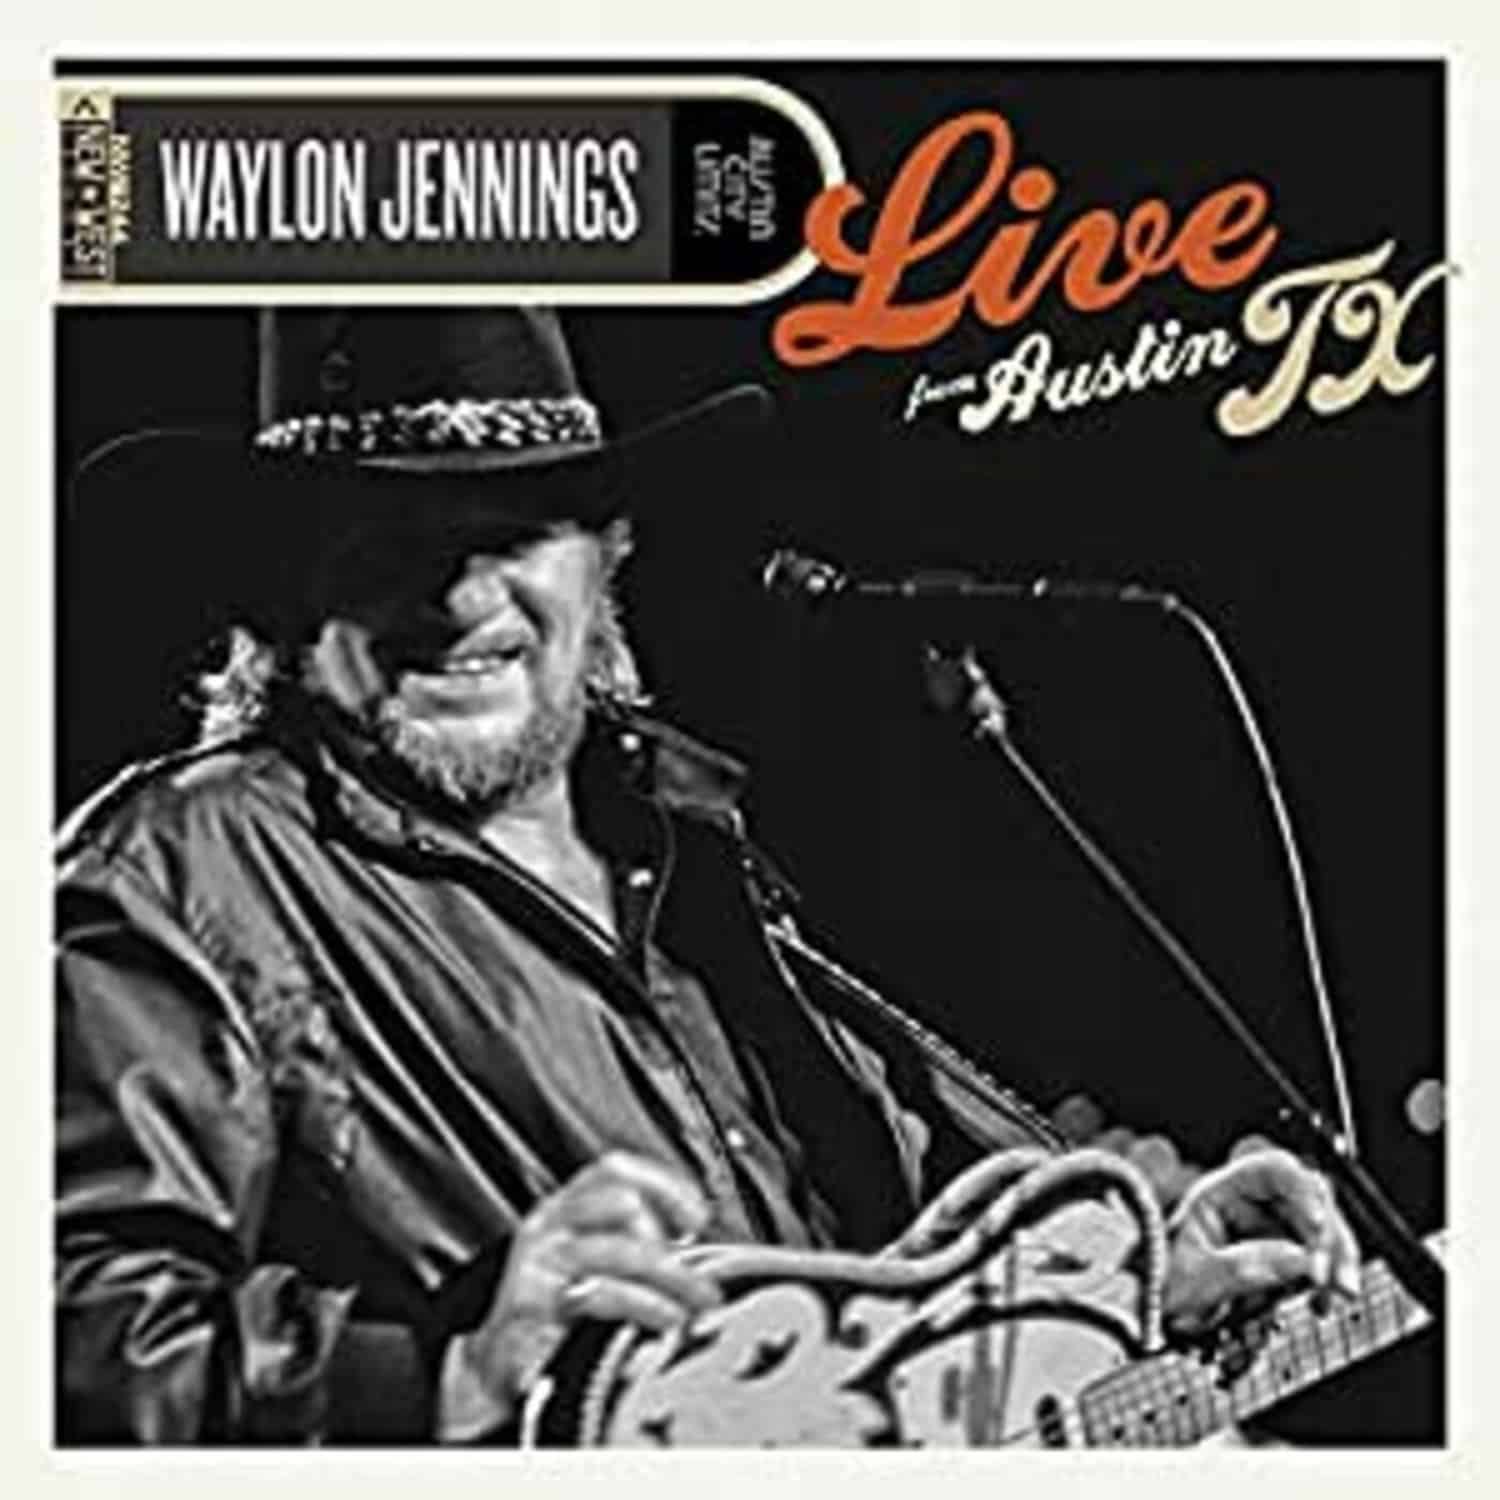 Waylon Jennings - LIVE FROM AUSTIN, TX 89 